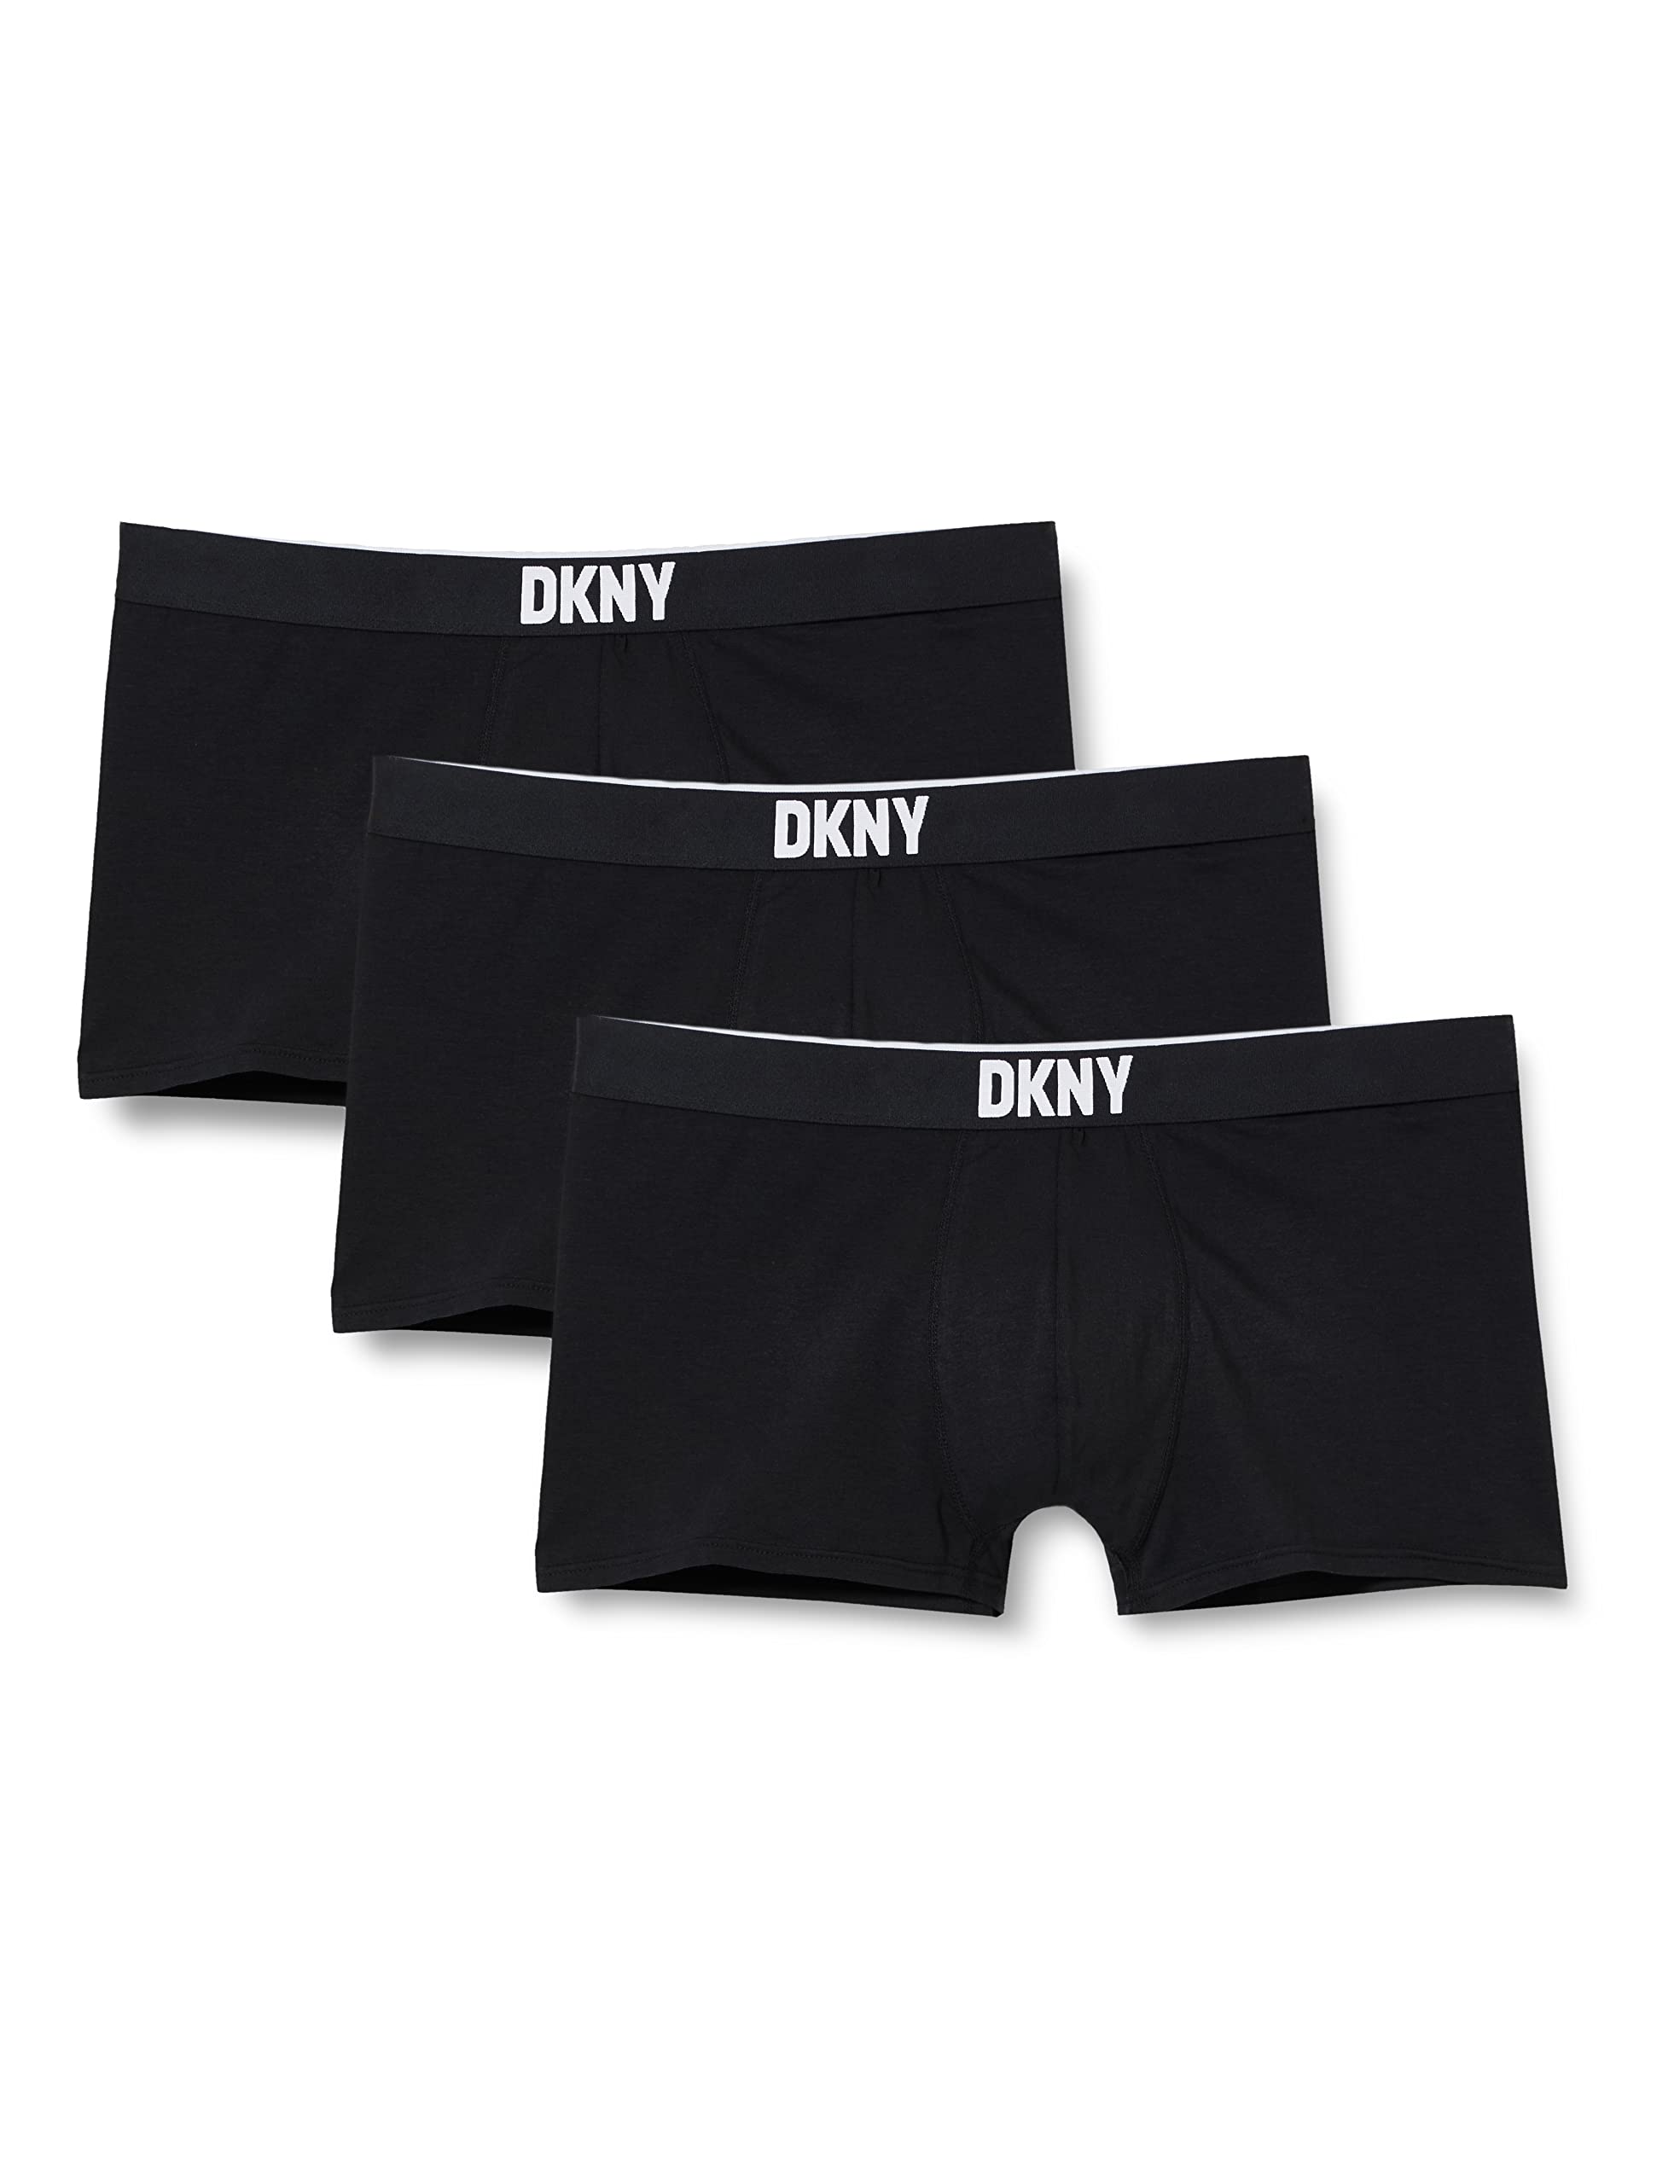 DKNY Men's Boxer Briefs, Black, XL (3er Pack)